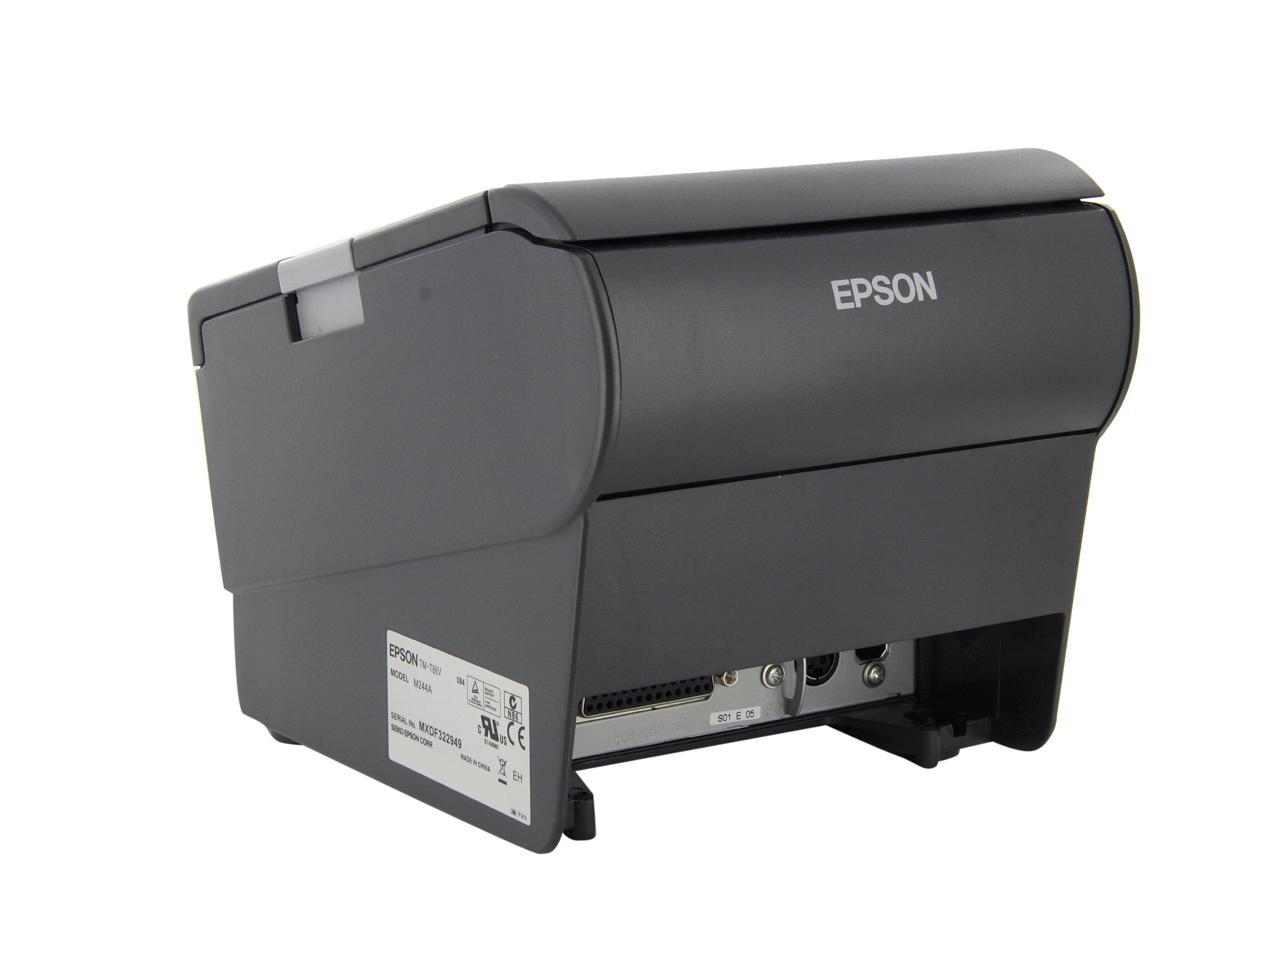 Epson Tm T88v Direct Thermal Printer Monochrome Desktop Receipt Print Neweggca 4250